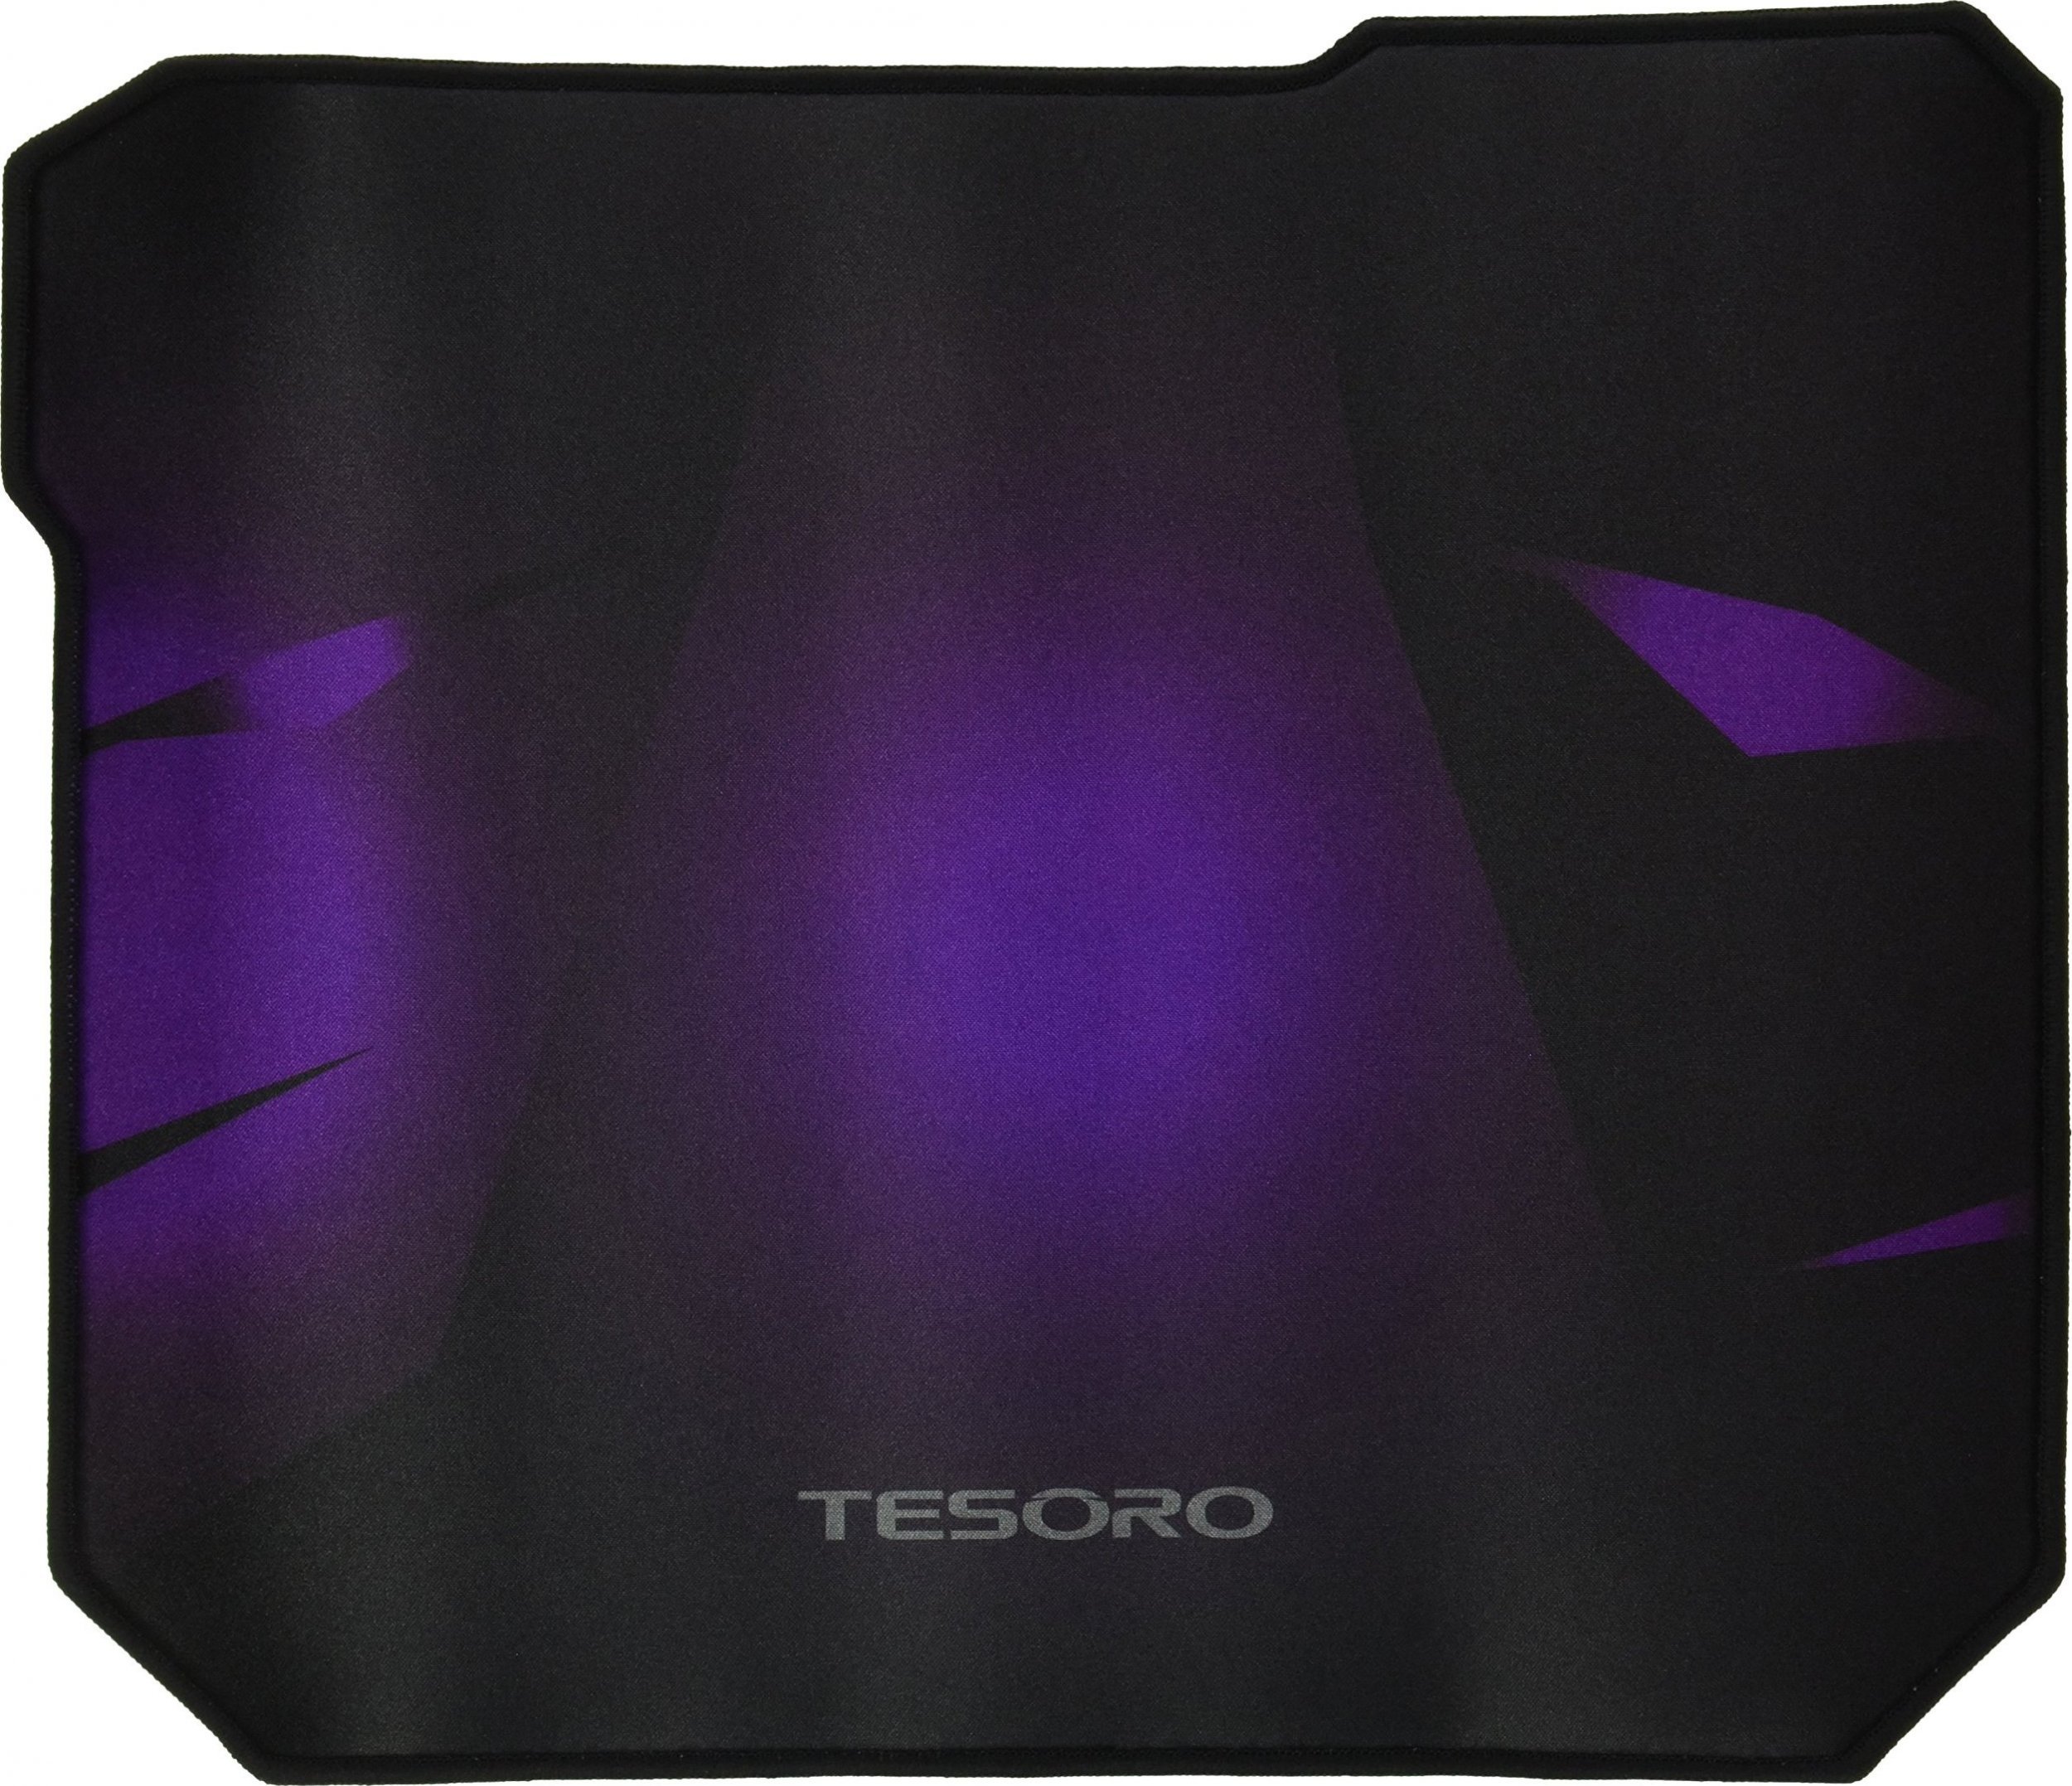 Mouse pad tesoro AEGIS X3 (5007)